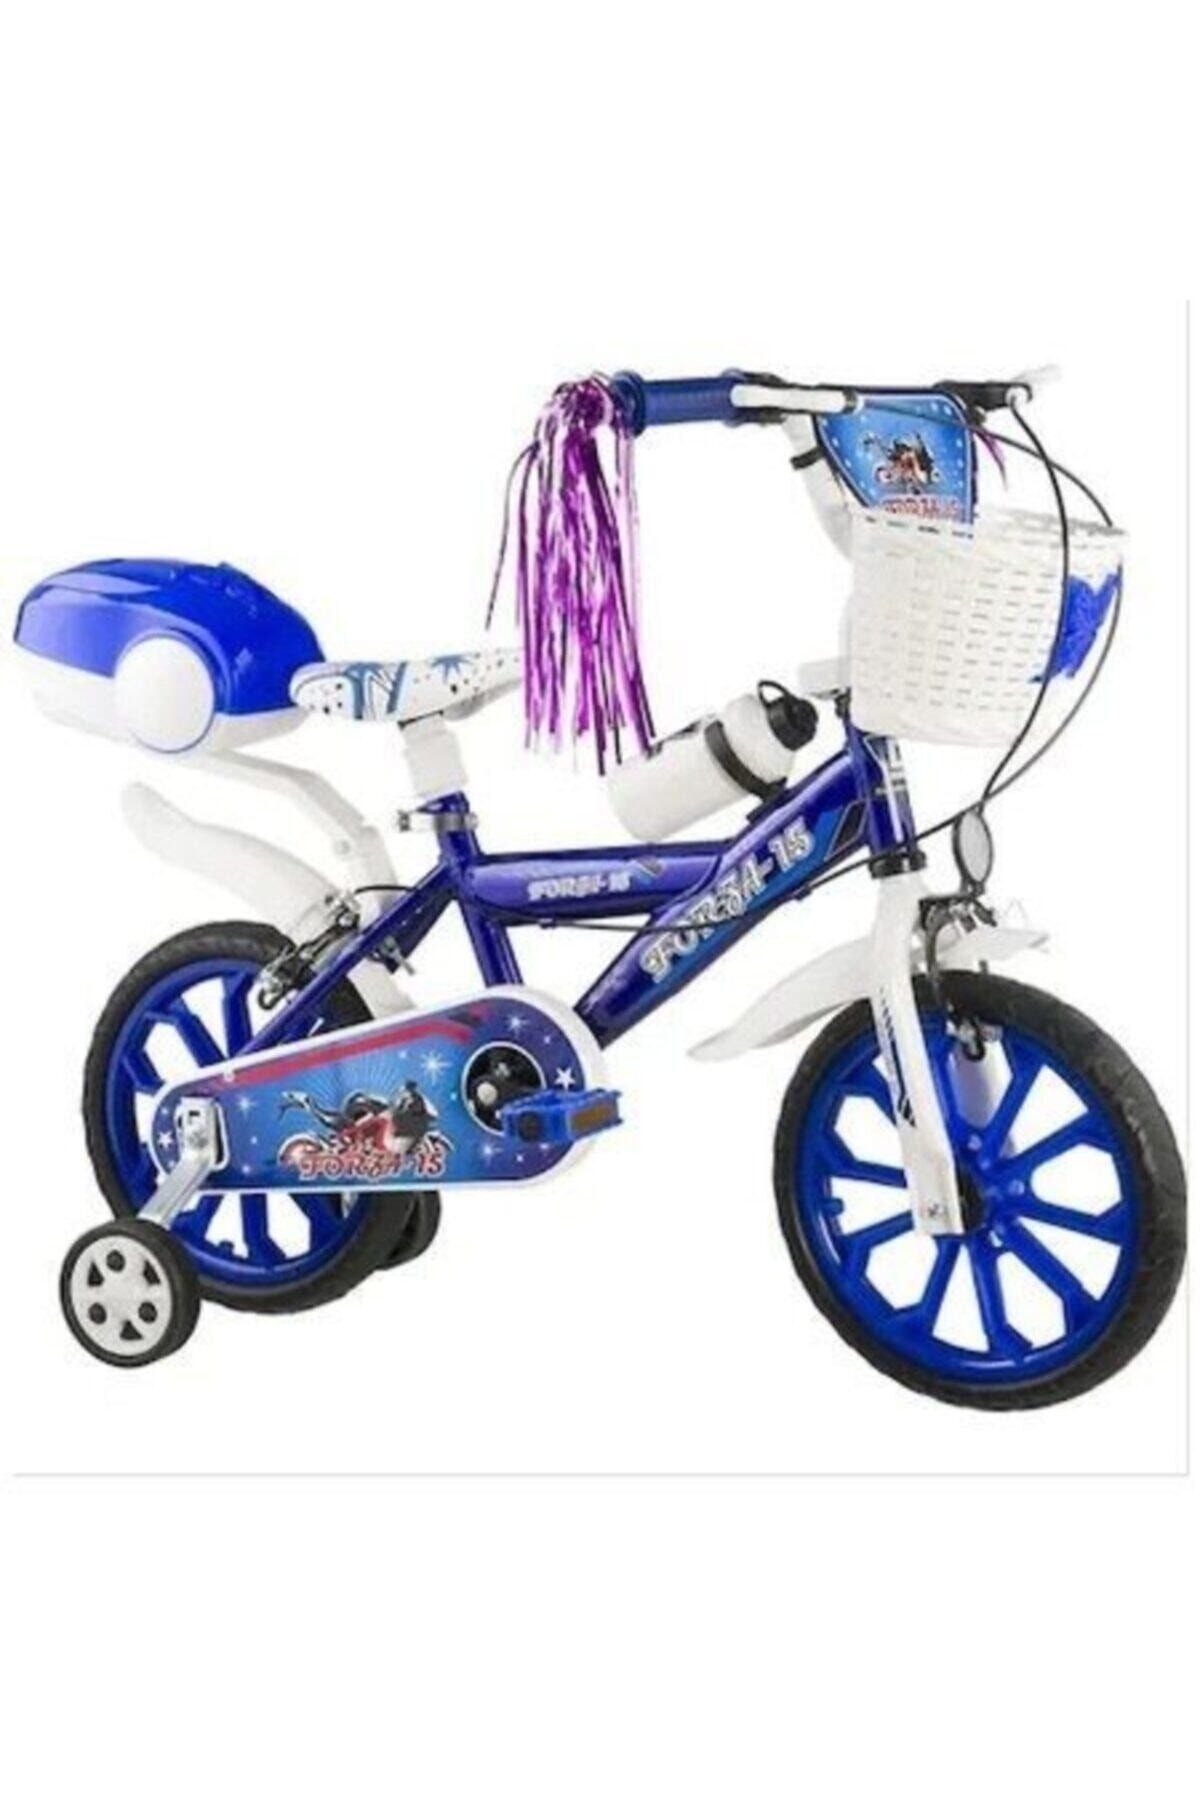 Dilaver 15 Jant Forza Çocuk Bisikleti Mavi 3-4-5 Yaş Çocuk Bisikleti